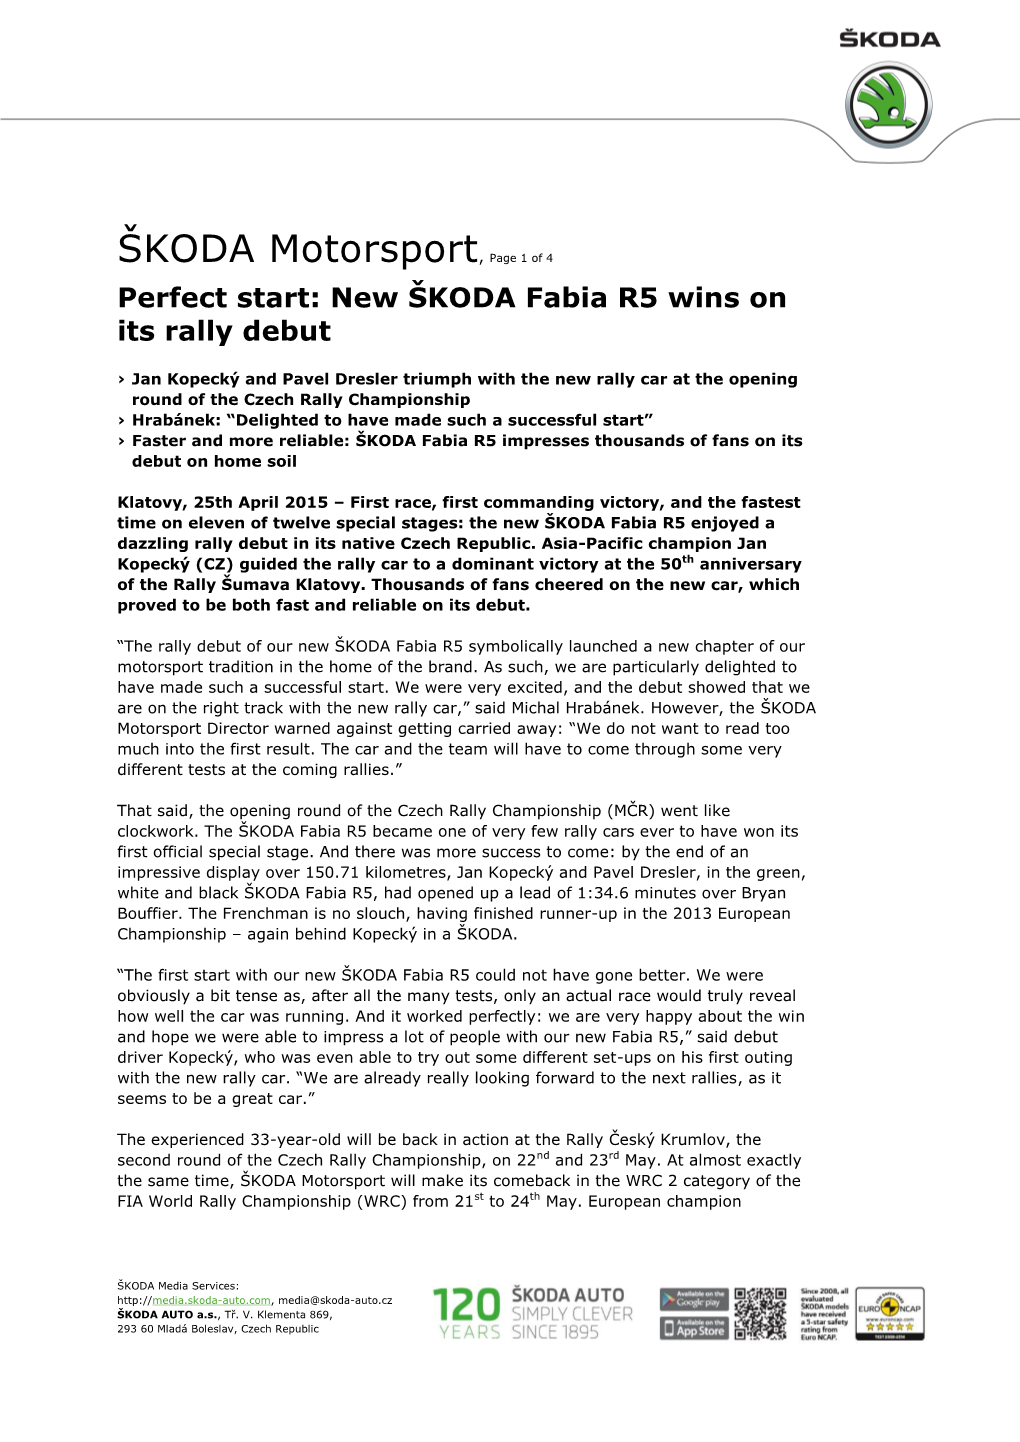 New ŠKODA Fabia R5 Wins on Its Rally Debut